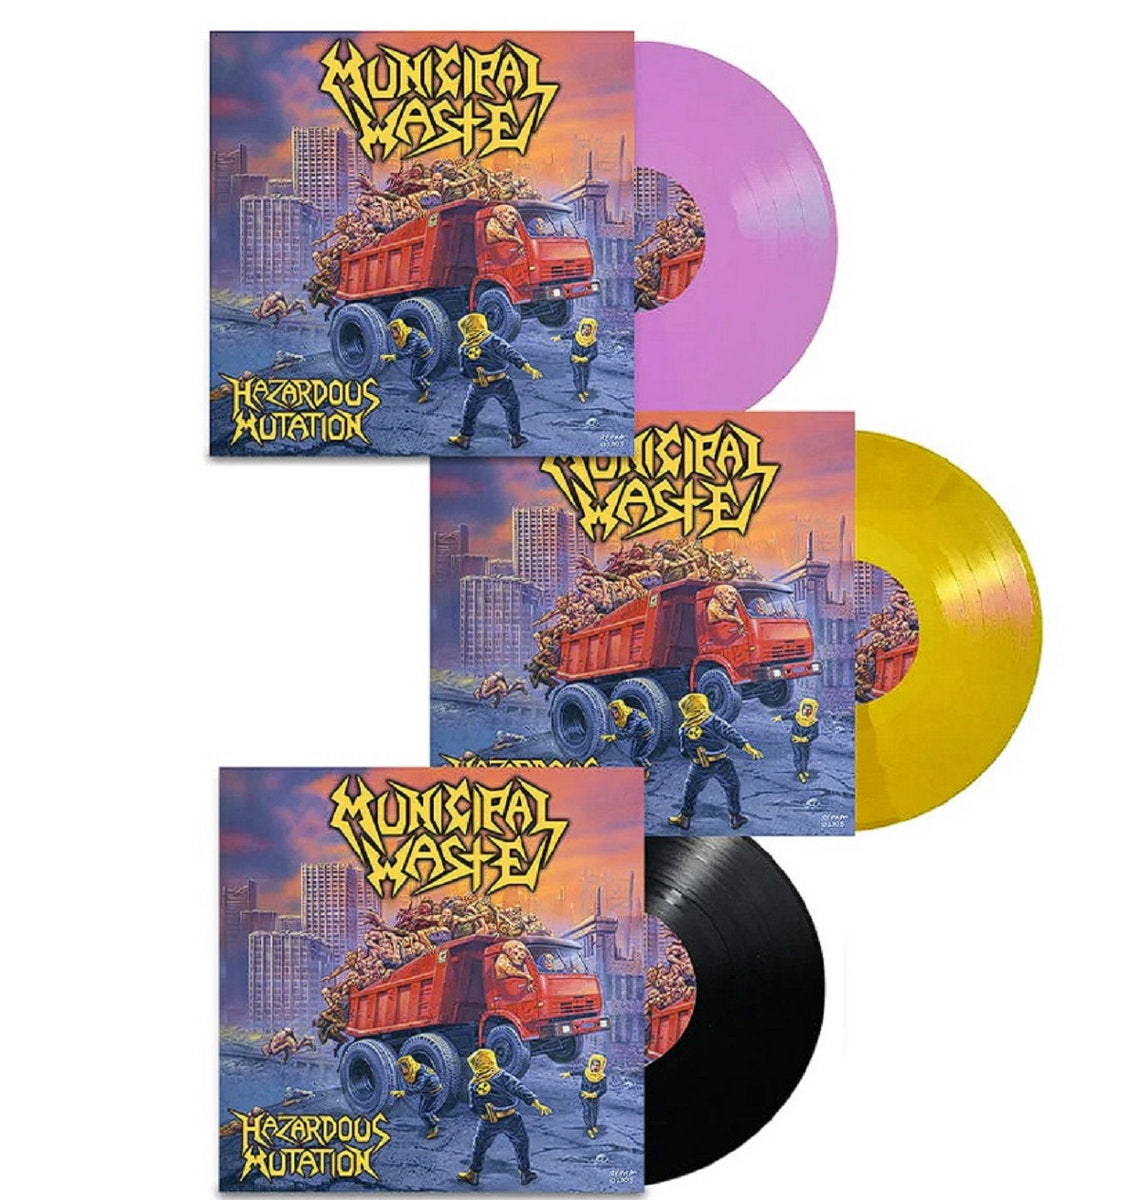 Municipal Waste "Hazardous Mutation" Limited Edition Vinyl